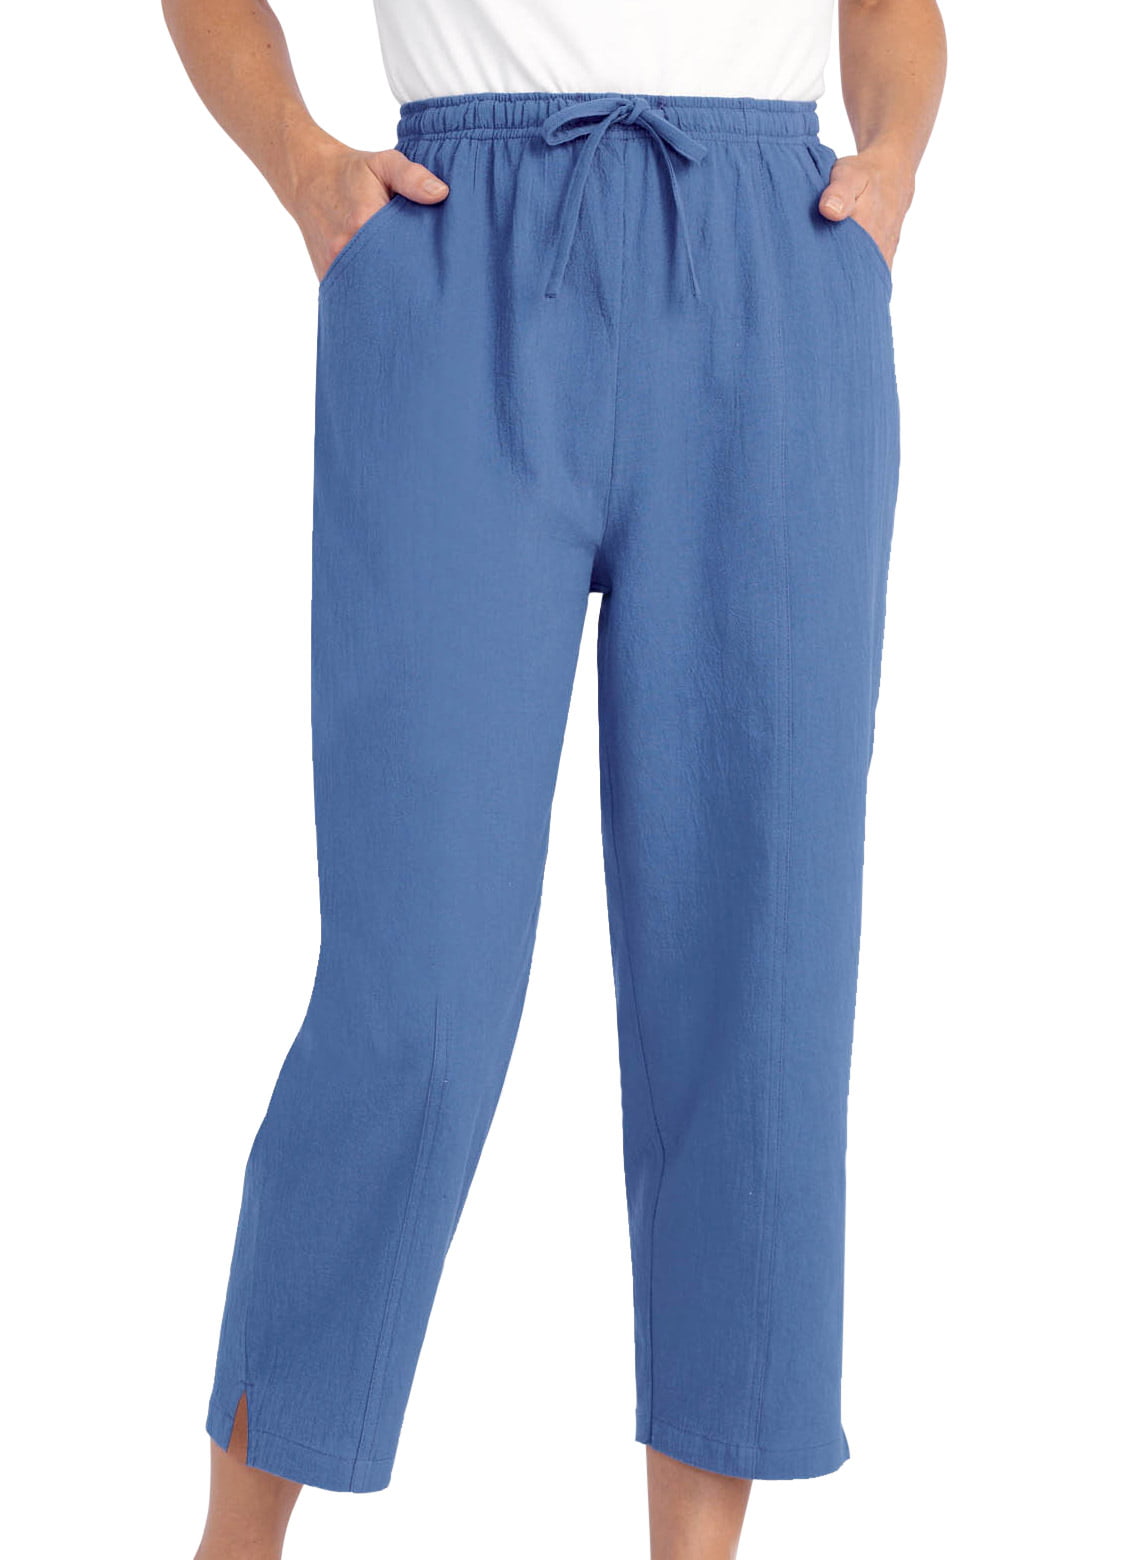 Drawstring Capri Pants with Pockets for Women - Walmart.com